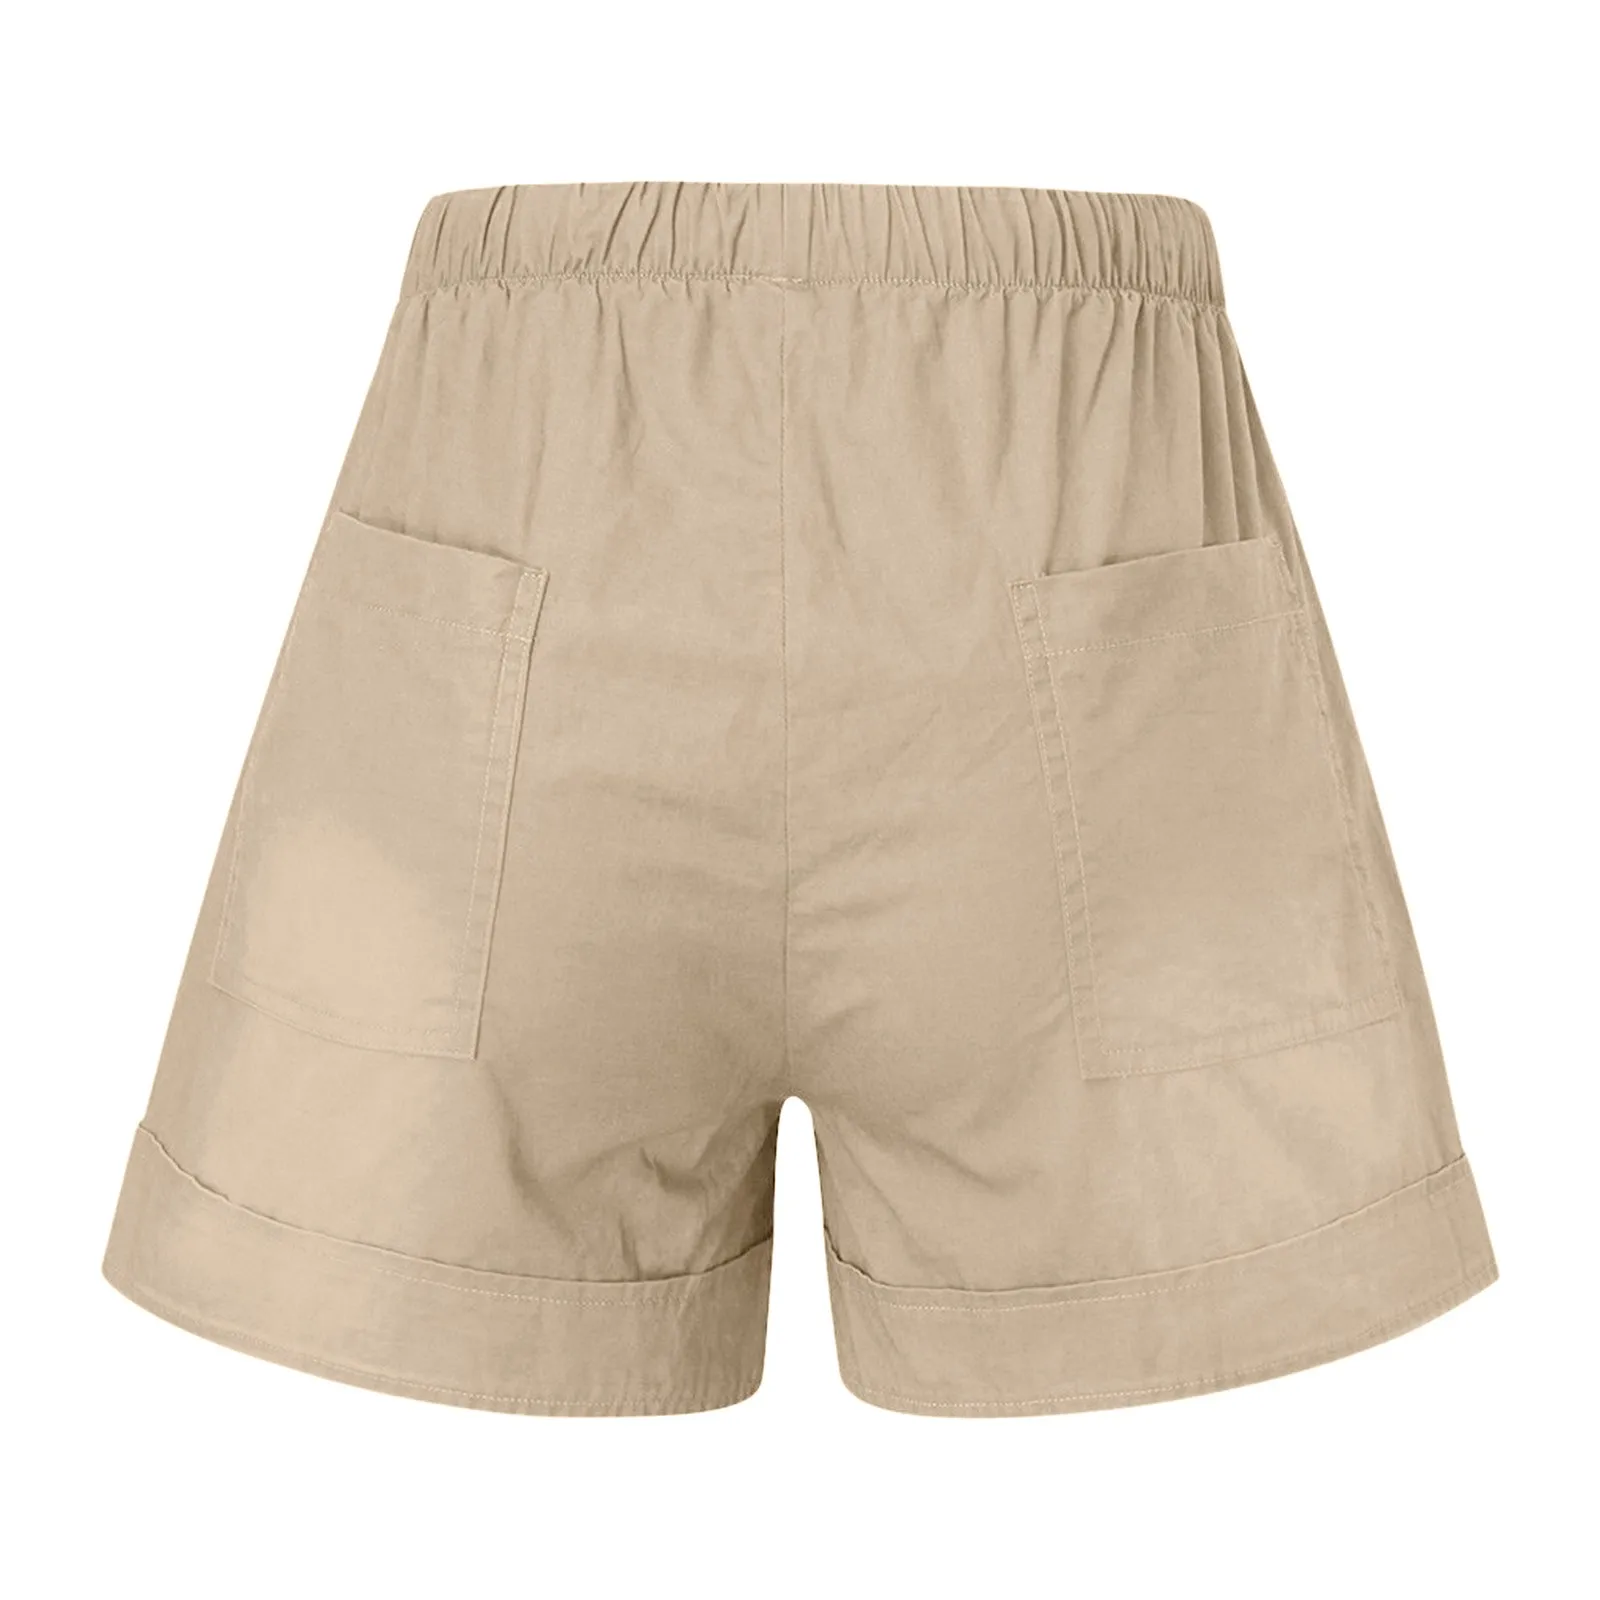 lululemon shorts 2021 New Womens Plus Size Short Comfy Drawstring Casual Elastic Waist Pocket Loose Shorts Pants High Quality Simple Daily Pants skorts